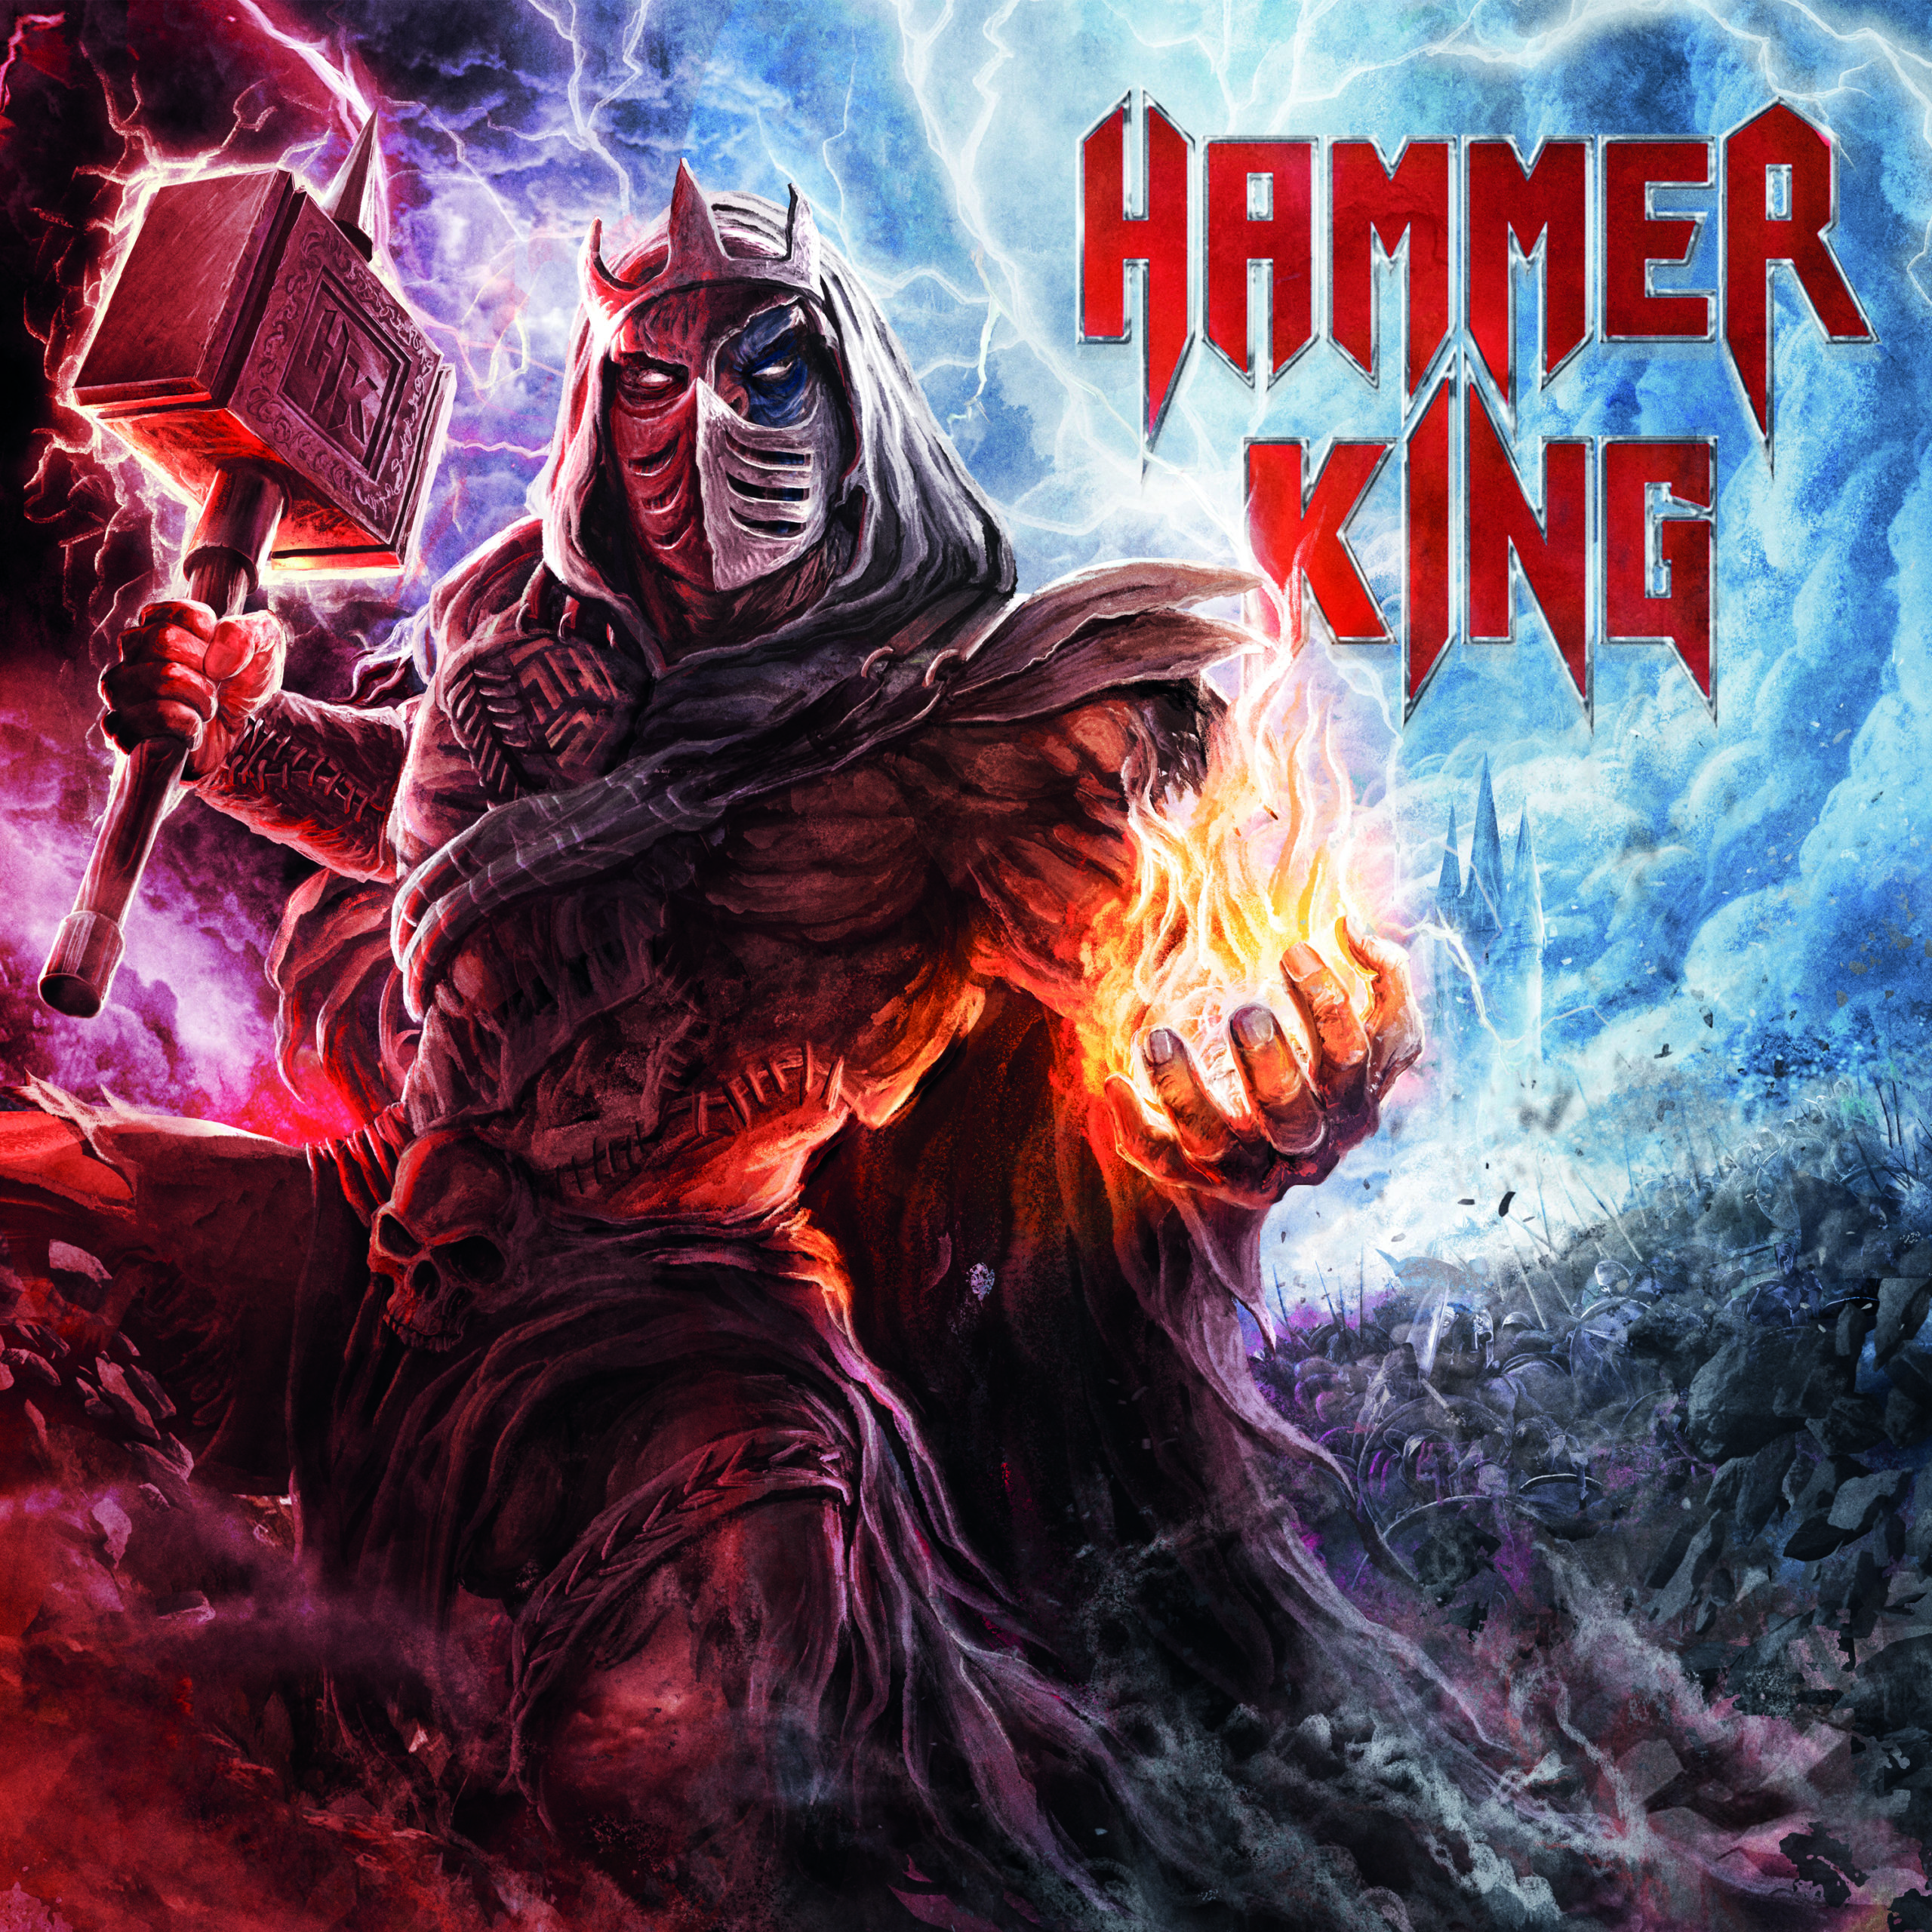 Review: Hammer King “Hammer King”